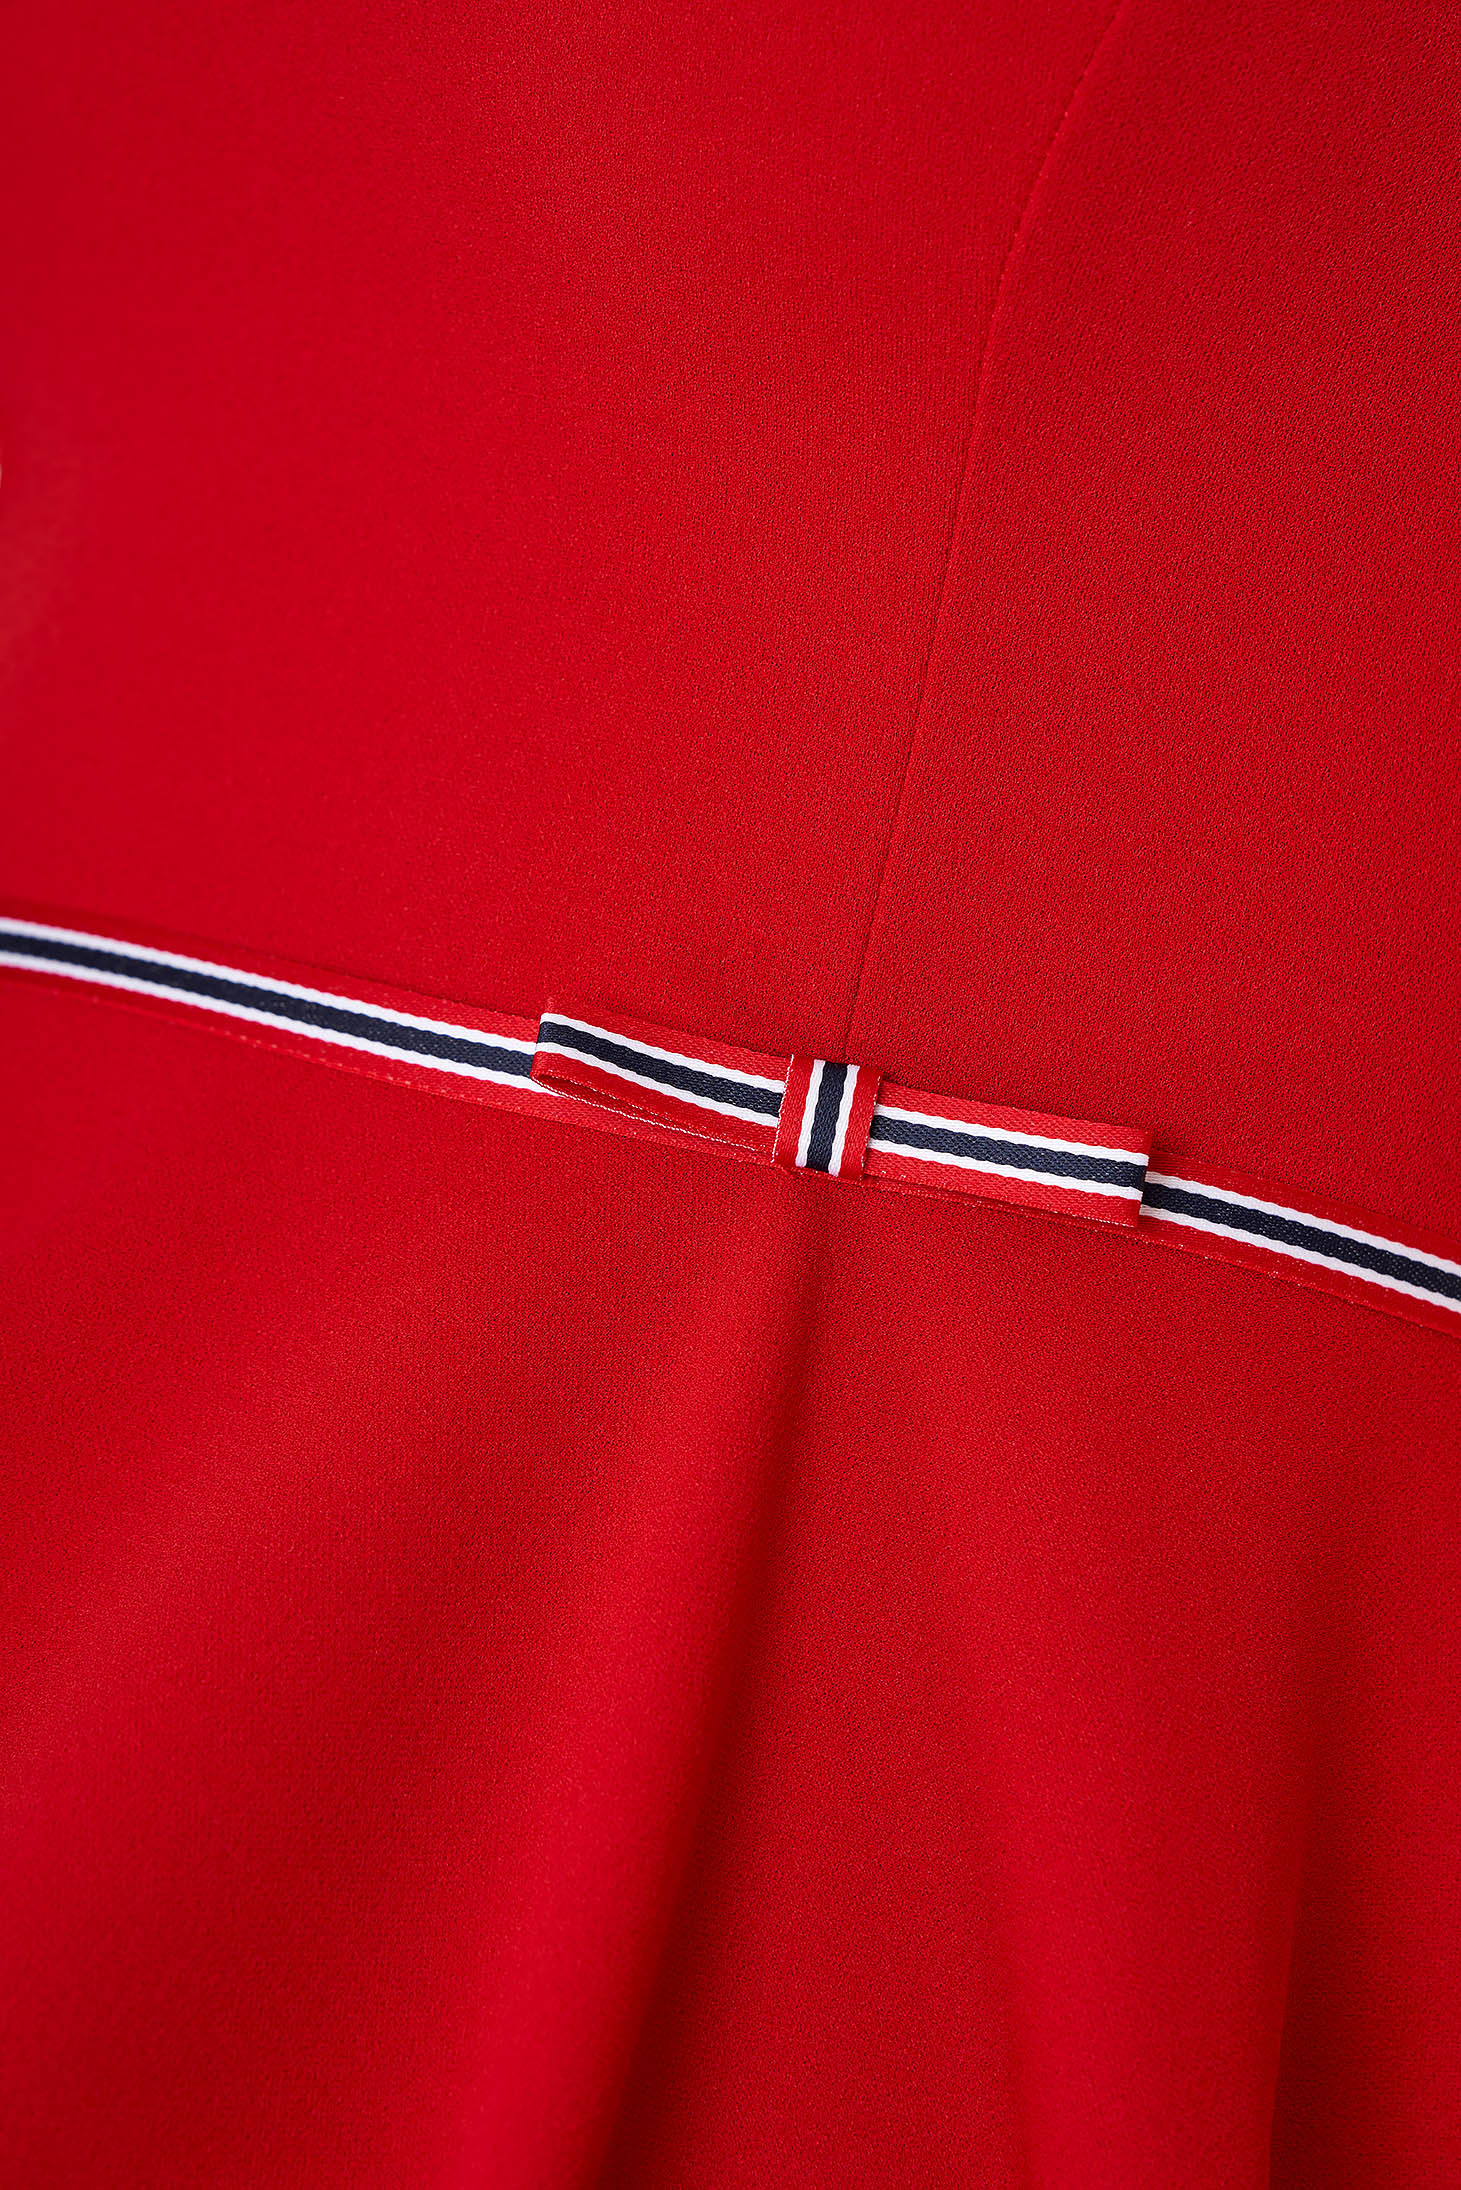 Rochie din material elastic rosie pana la genunchi in clos cu decolteu in v - StarShinerS 6 - StarShinerS.ro